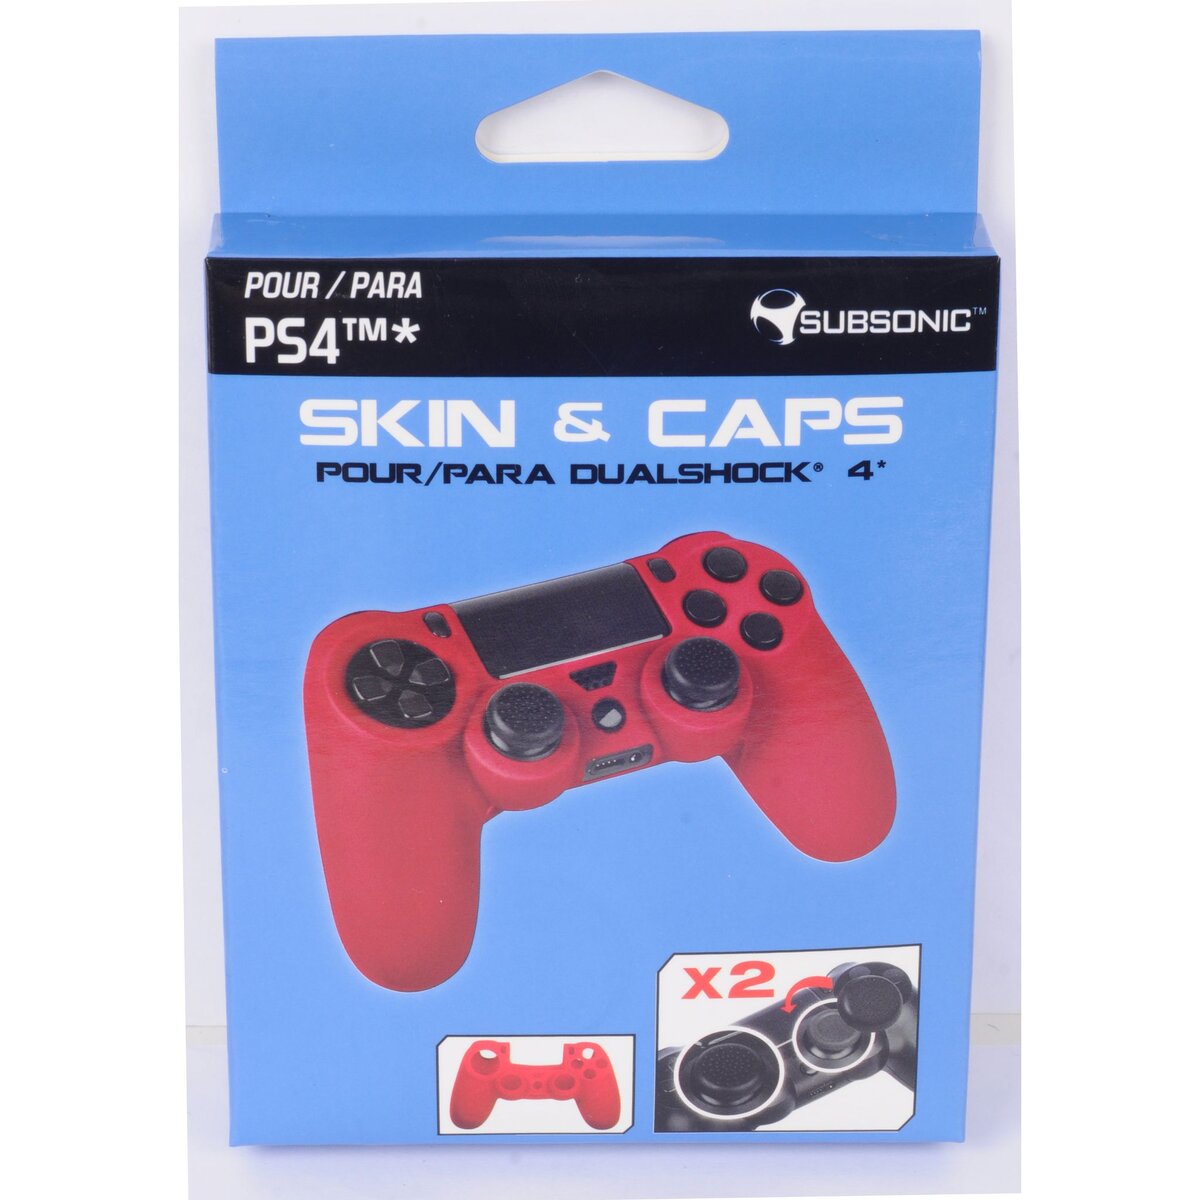 Skin & Caps pour Dualshock 4